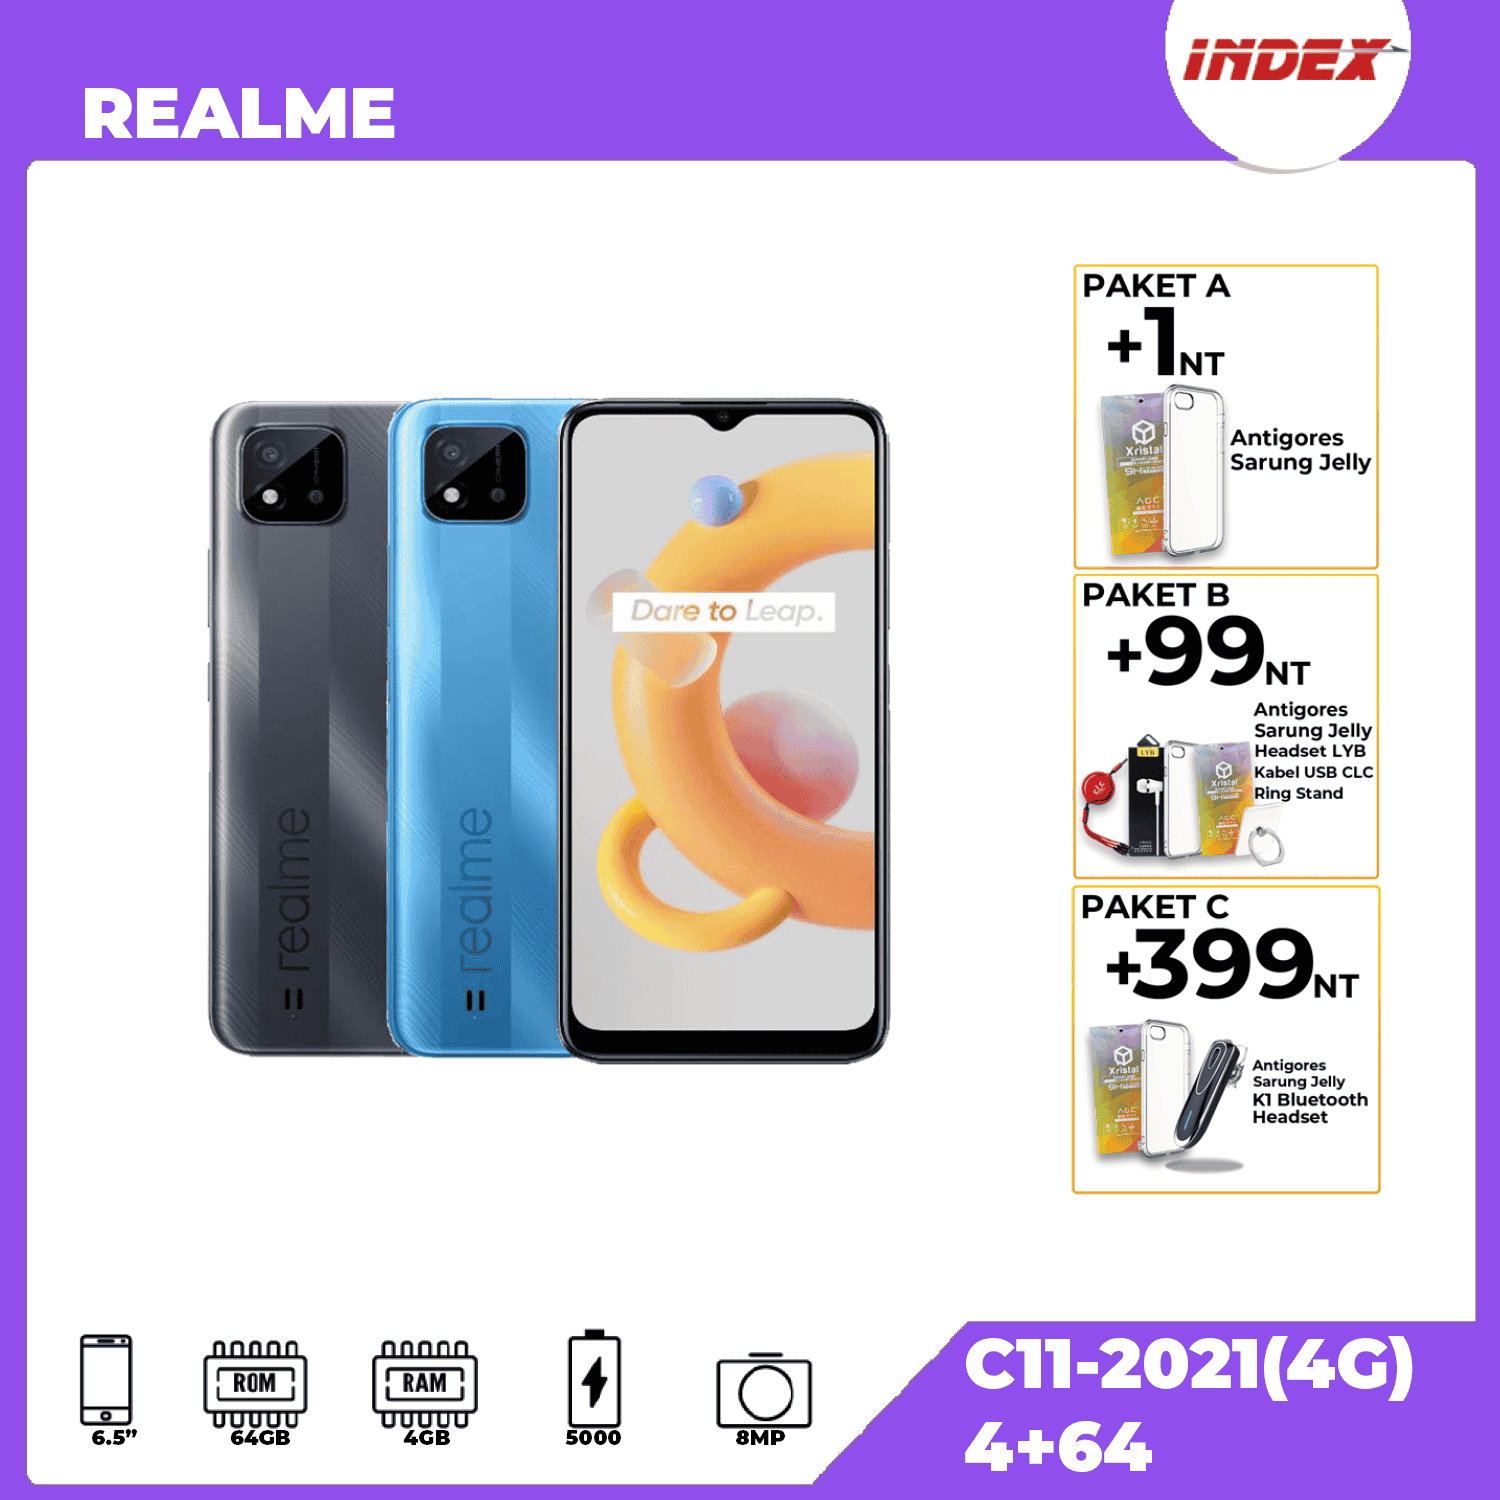 REALME C11-2021(4G) 4GB/64GB